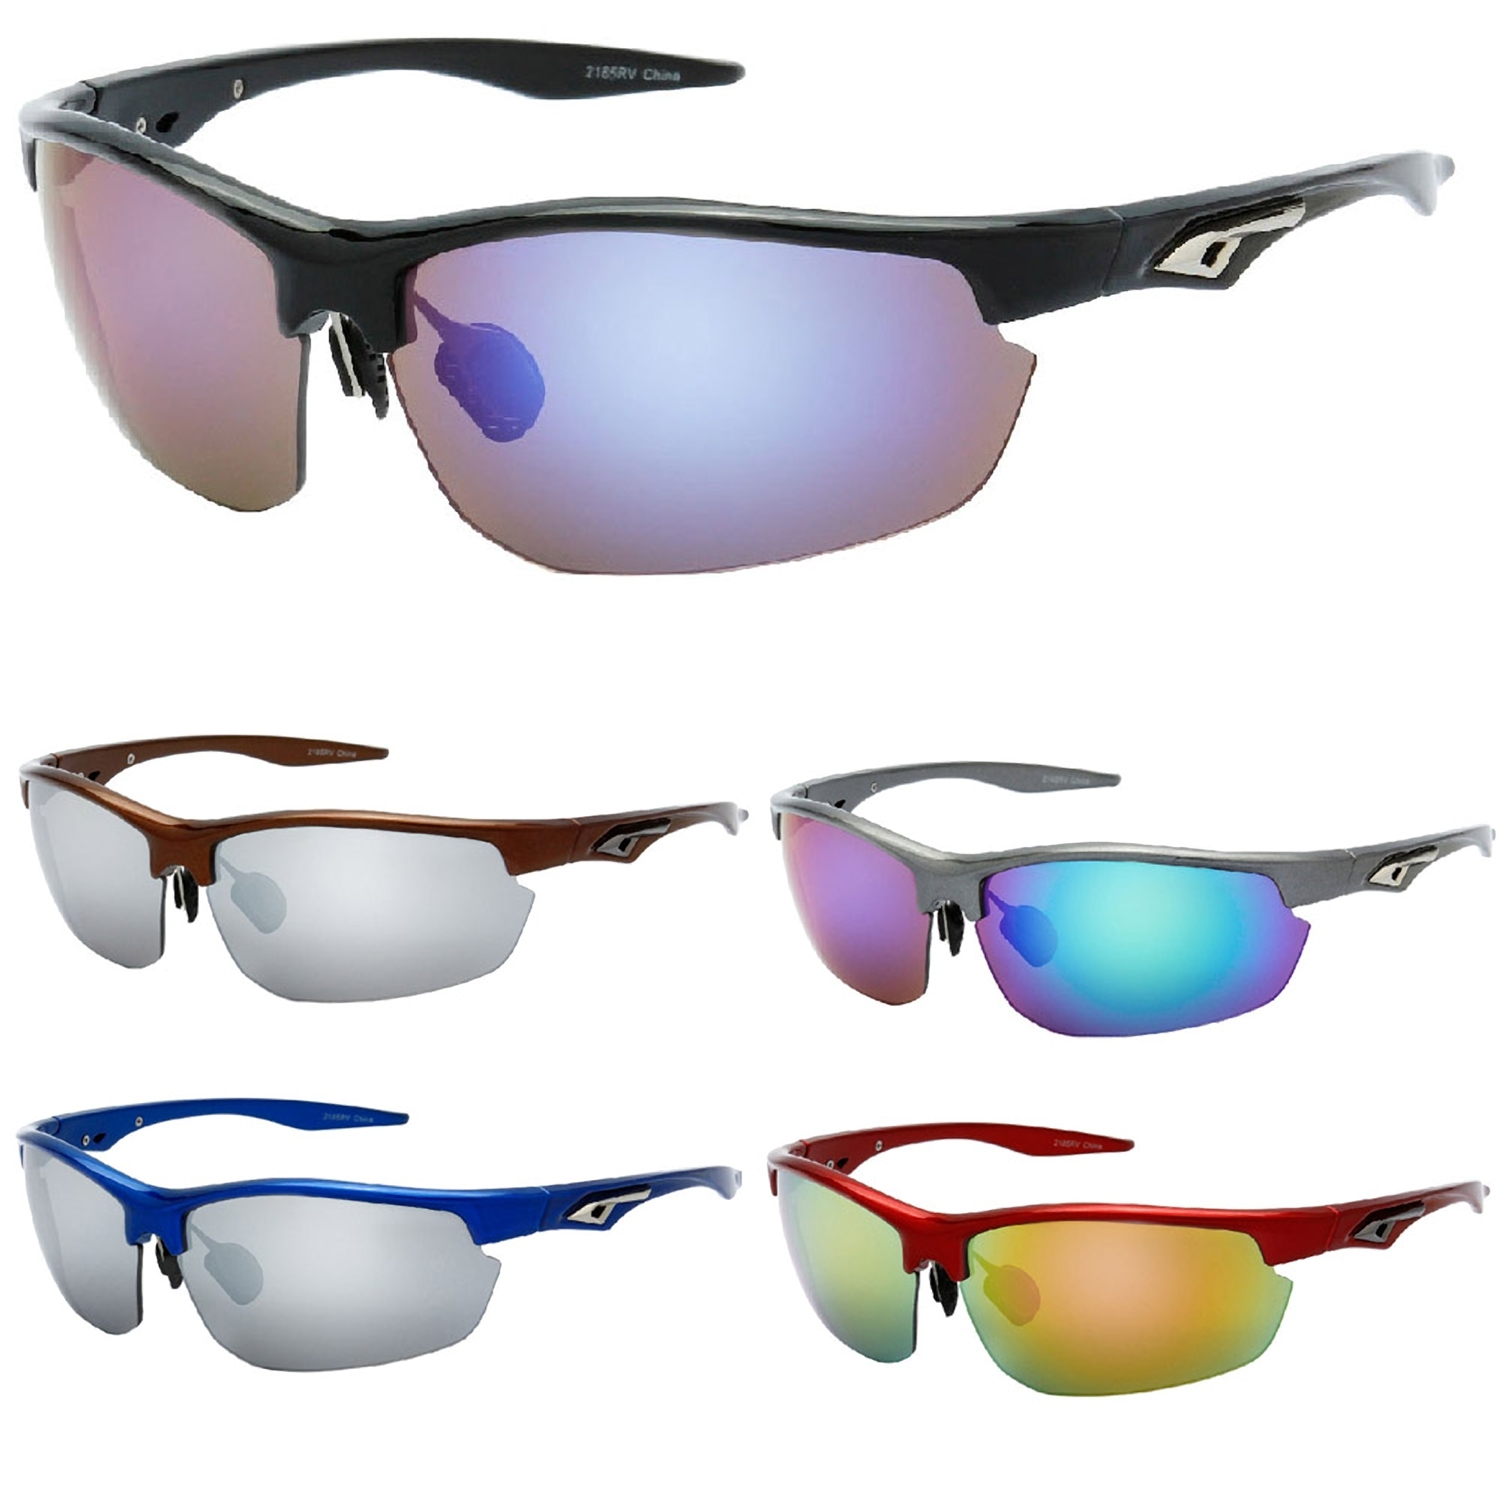 MLC Eyewear Model 85R UV400 Ultra Reflective Light Weight Sport Frame Sunglasses - image 1 of 2